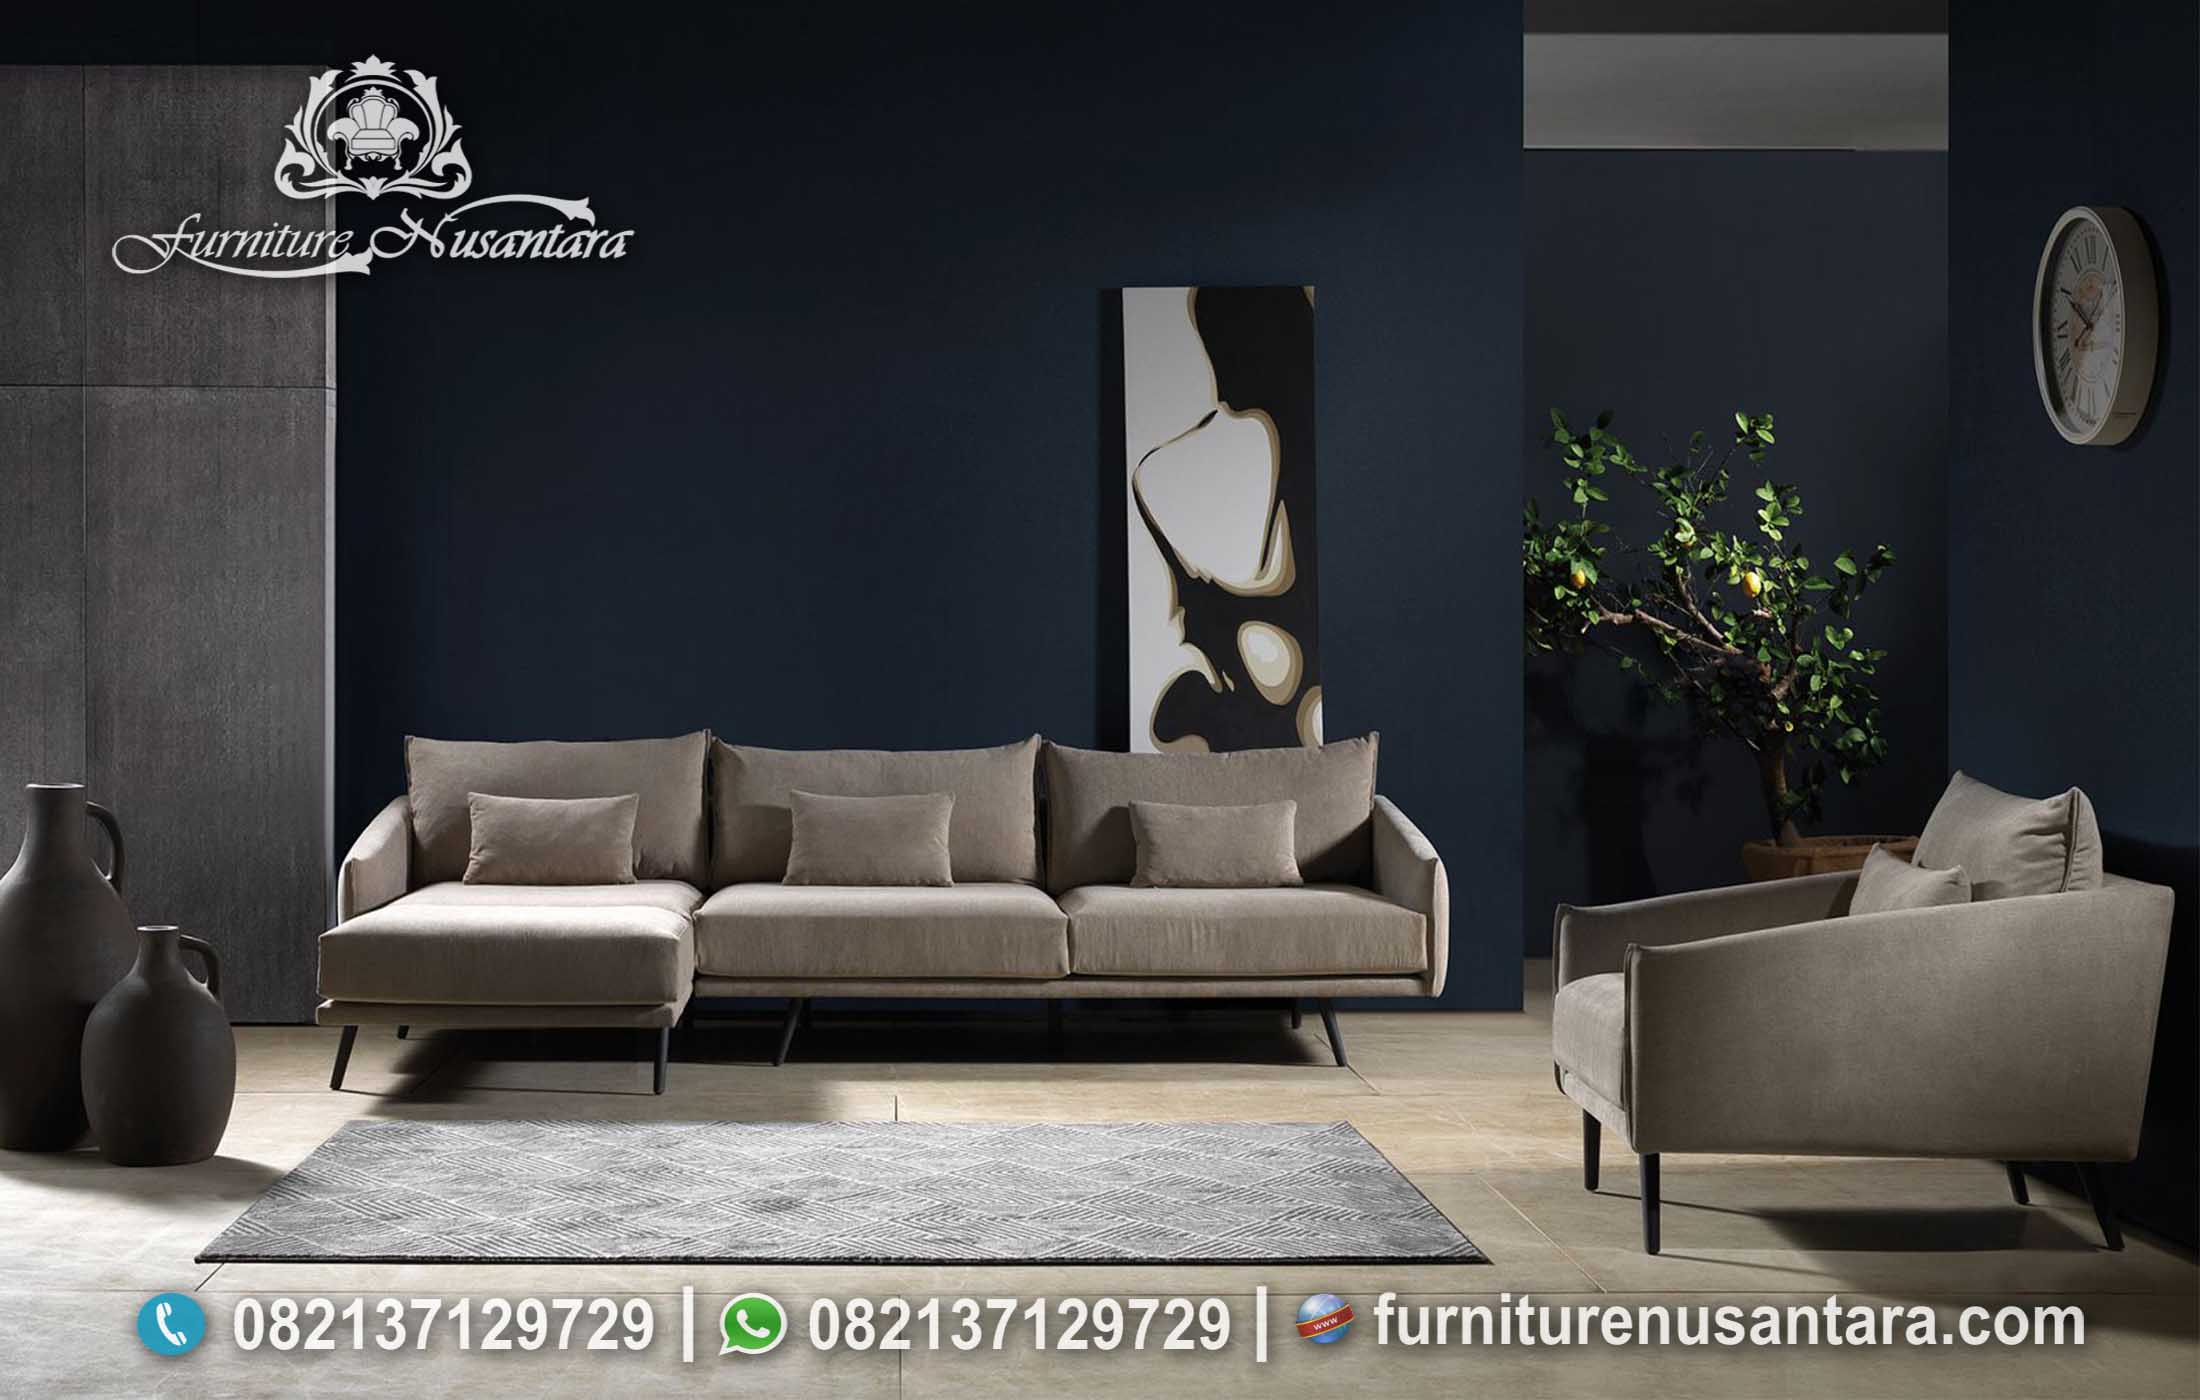 Jual Sofa Minimalis Modern Bandung ST-24, Furniture Nusantara